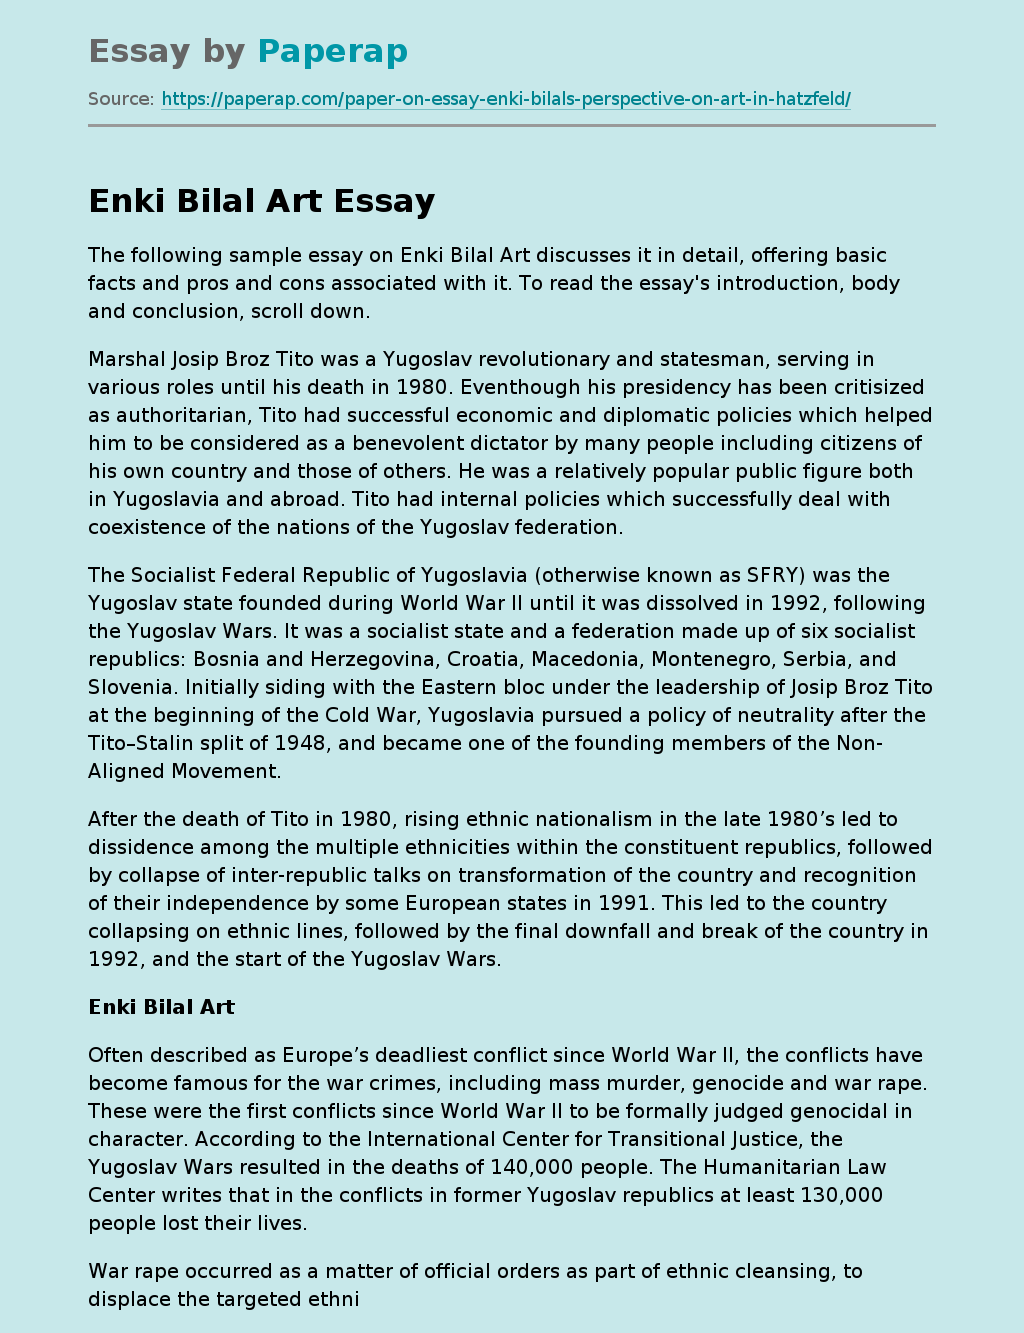 Enki Bilal Art: Croats and Serbs in Dalmatia